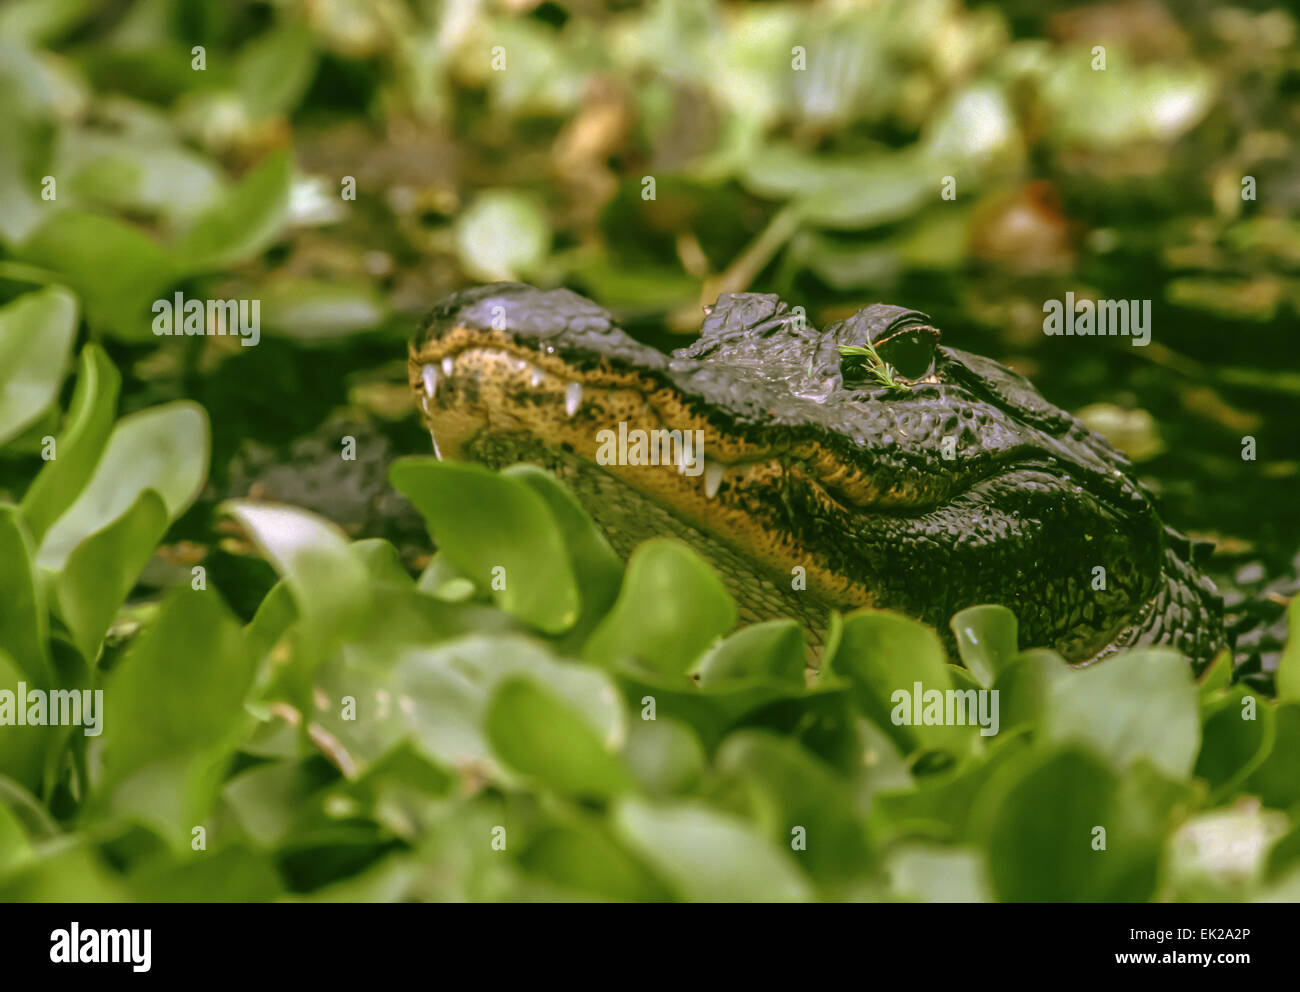 American Alligator or Pike-headed alligator (Alligator mississippiensis) lurking in lettuce pond in Corkscrew Swamp Sanctuary Stock Photo